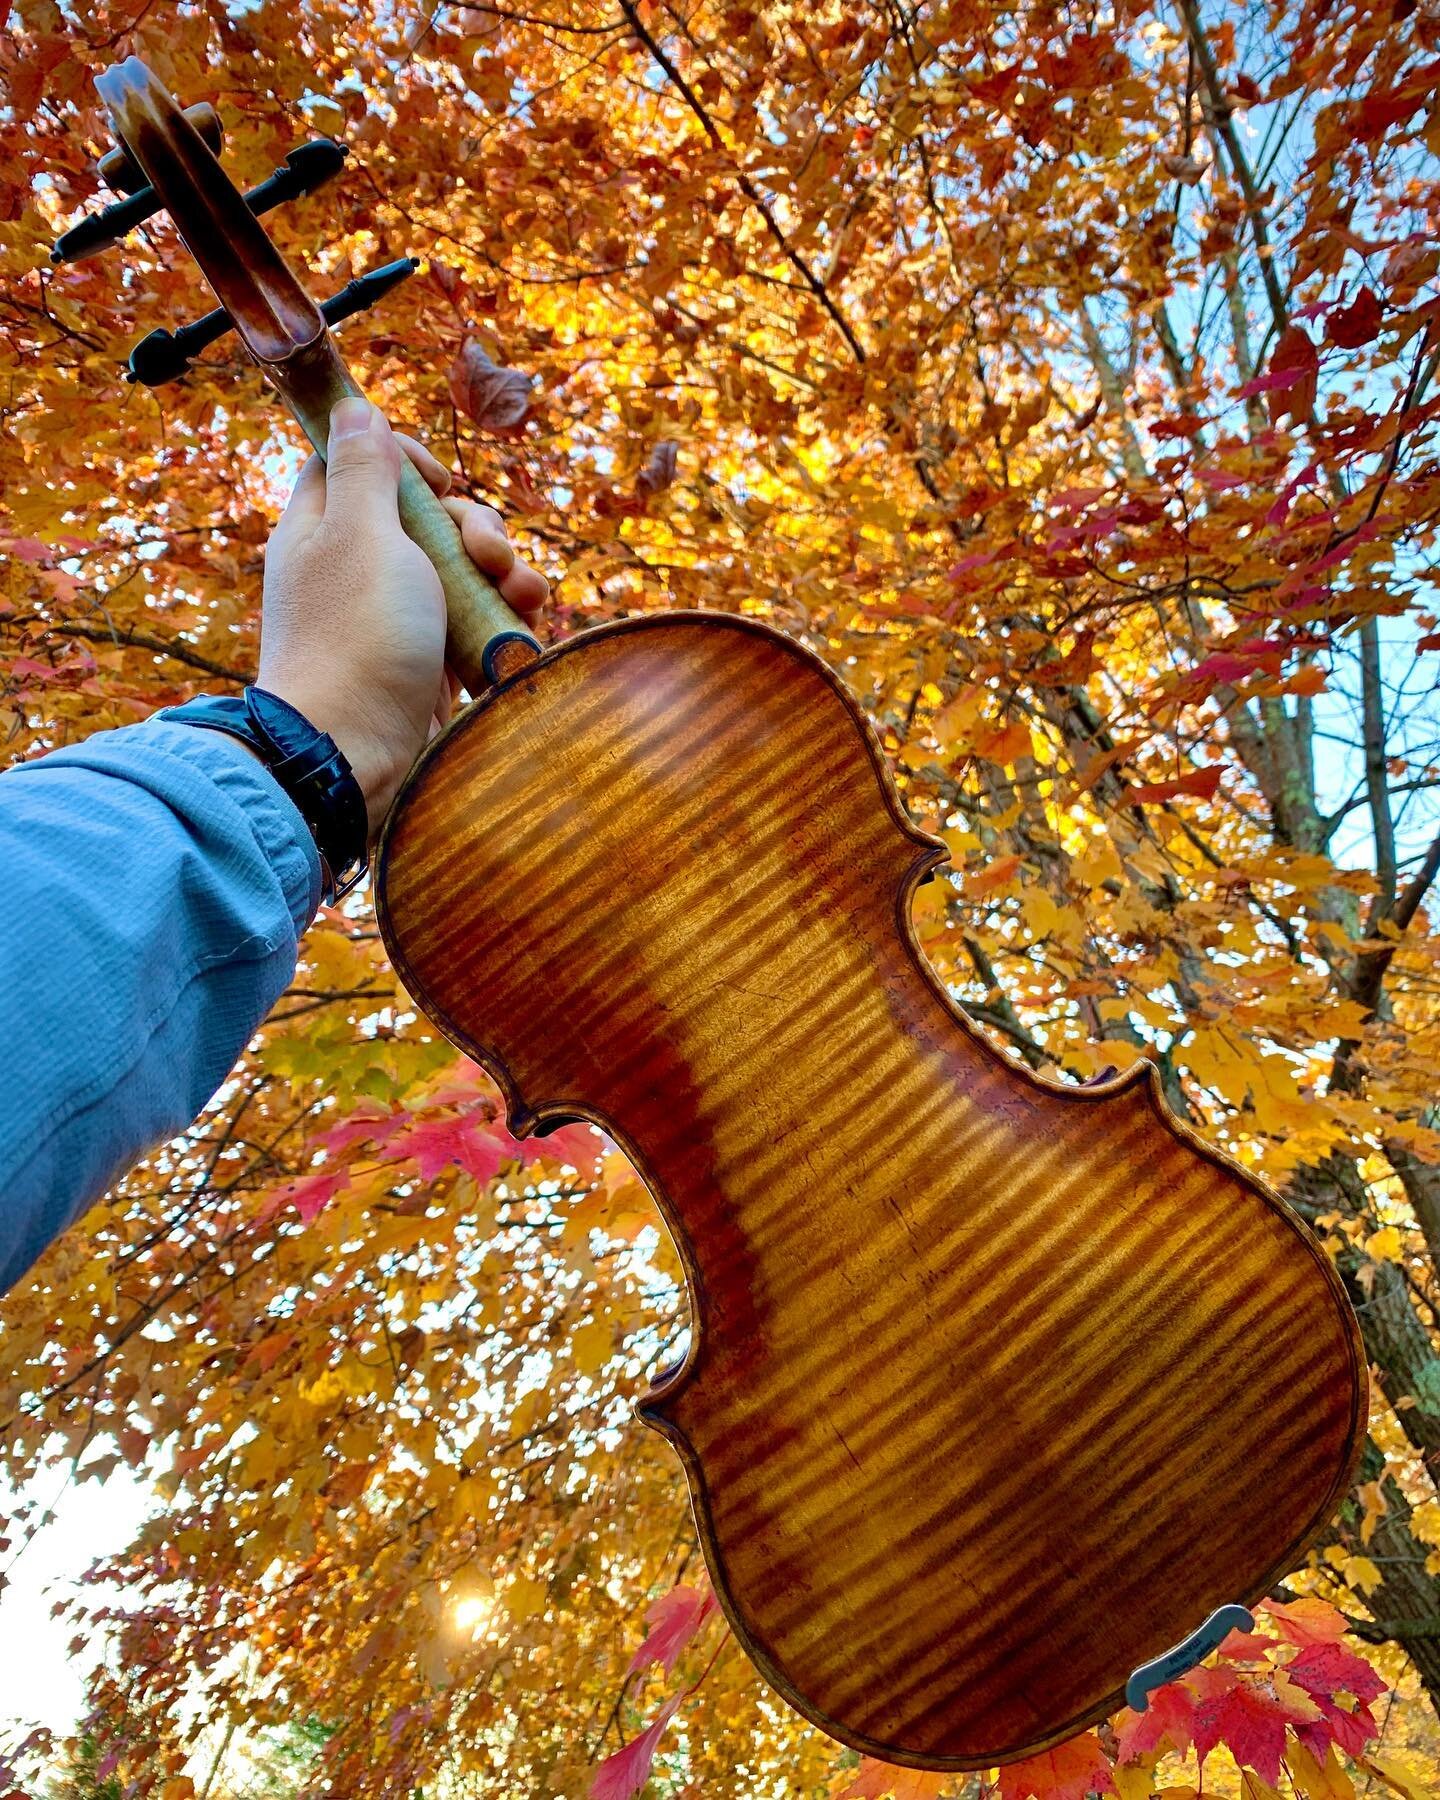 Maple 🍁🔥
📸 @jiakimvc 

#violin #violinist #geige #instrumentporn #violinista #violino #violinistsofinstagram #violinstagram #바이올린 #바이올리니스트 #fallfoliage #nature #guadagnini #maple #autumn